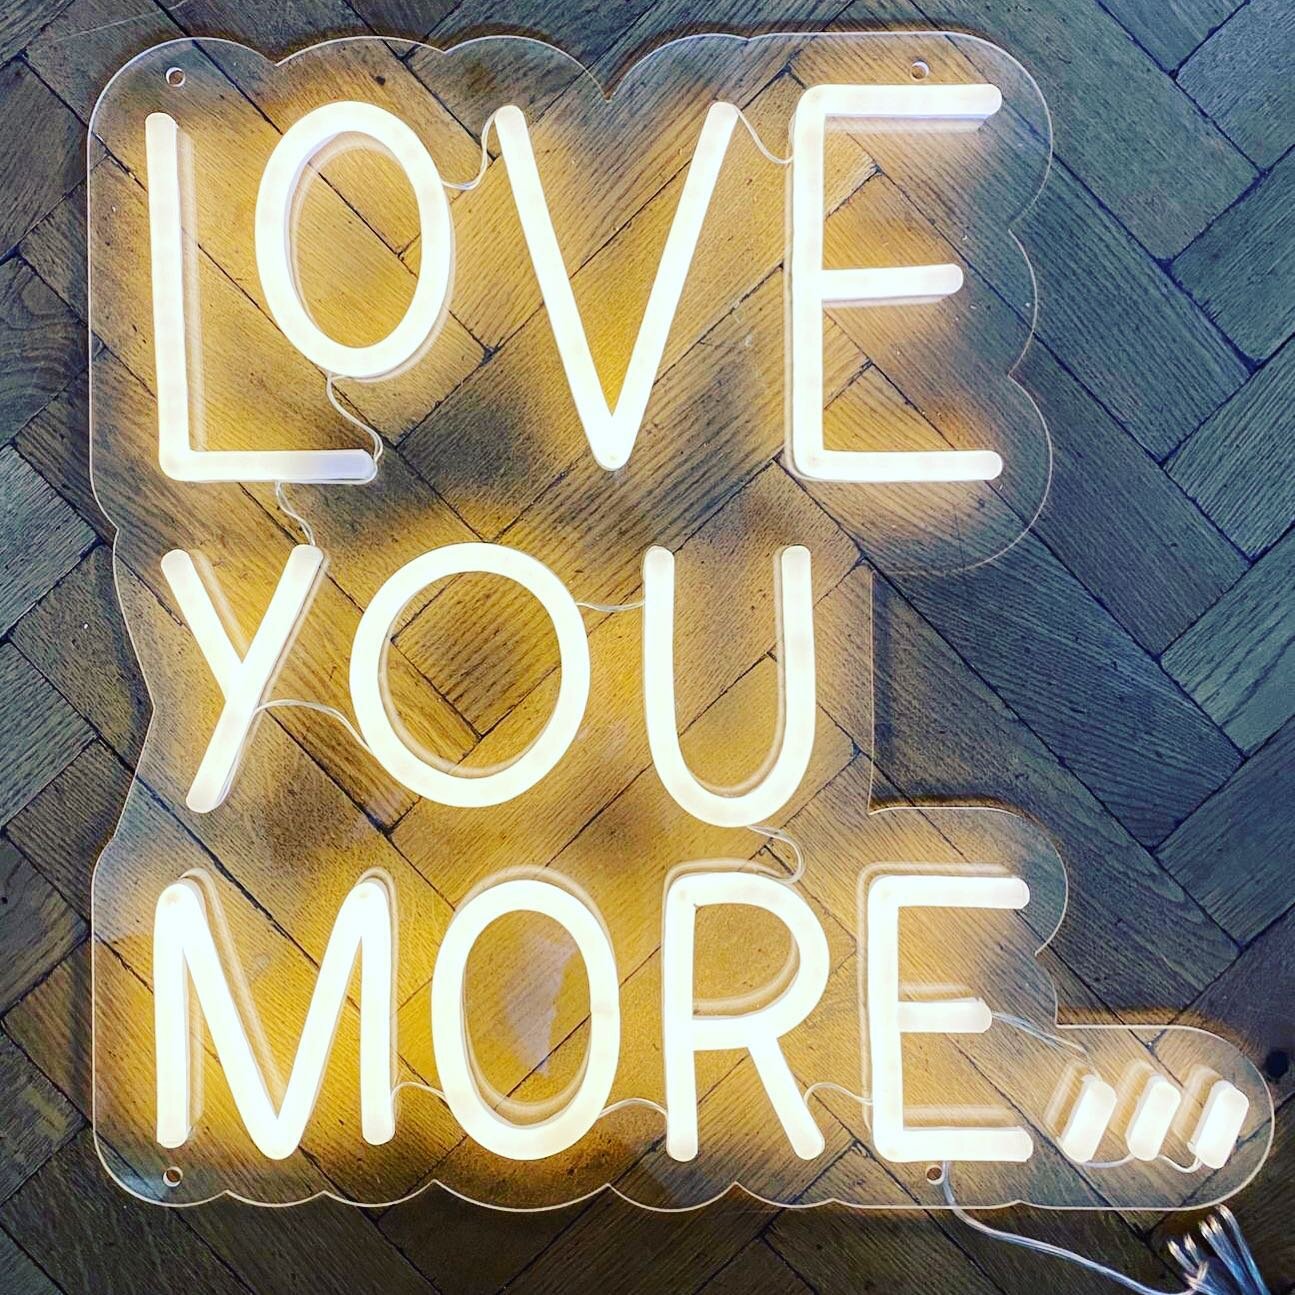 Spread the love this weekend! #loveyoumore #ledneonsigns #ledneon